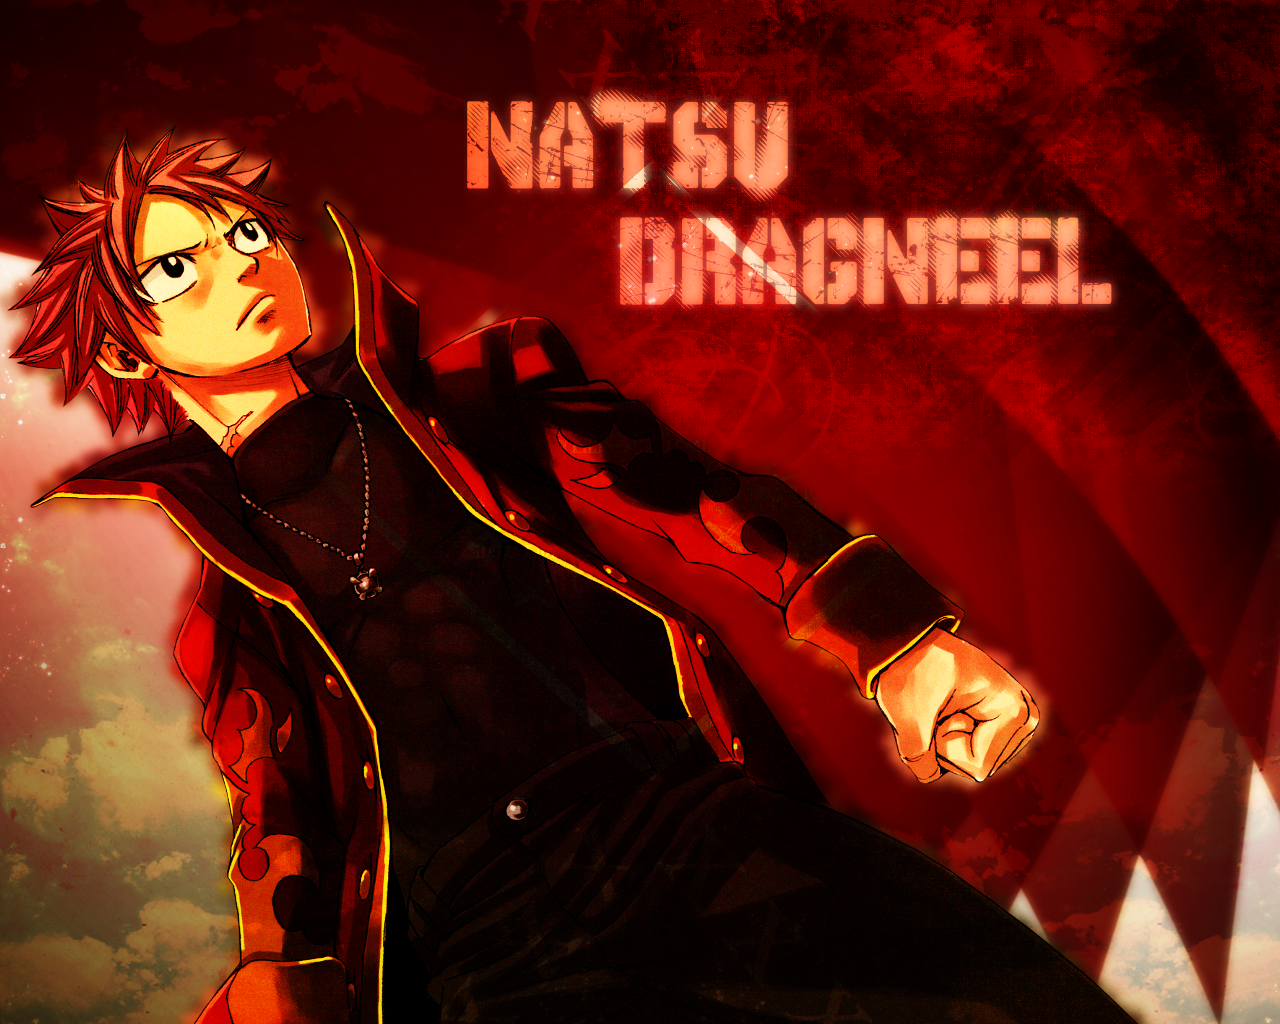 natsu dragneel dragonforce wallpaper